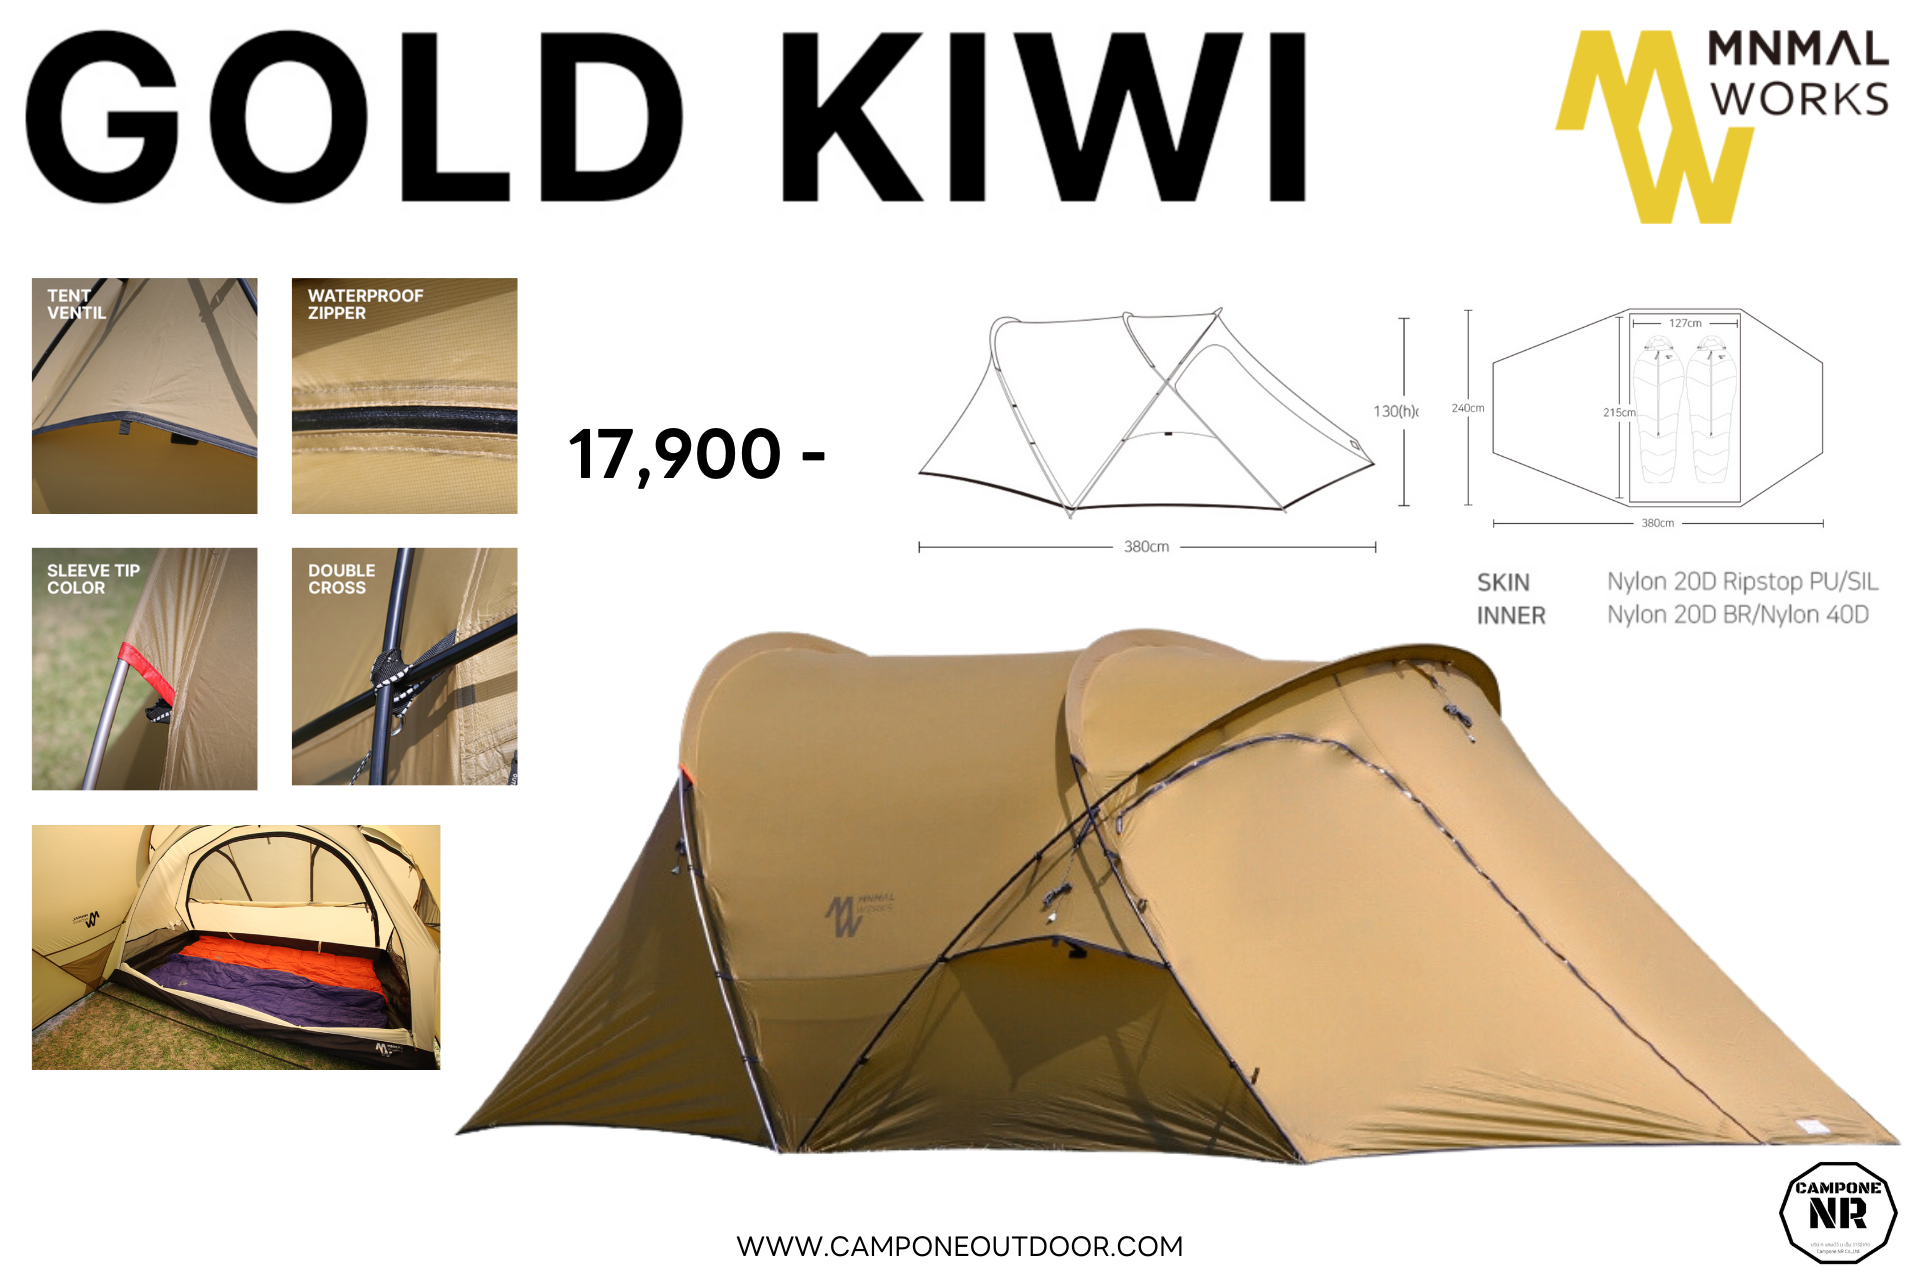 Minimal Works Gold Kiwi